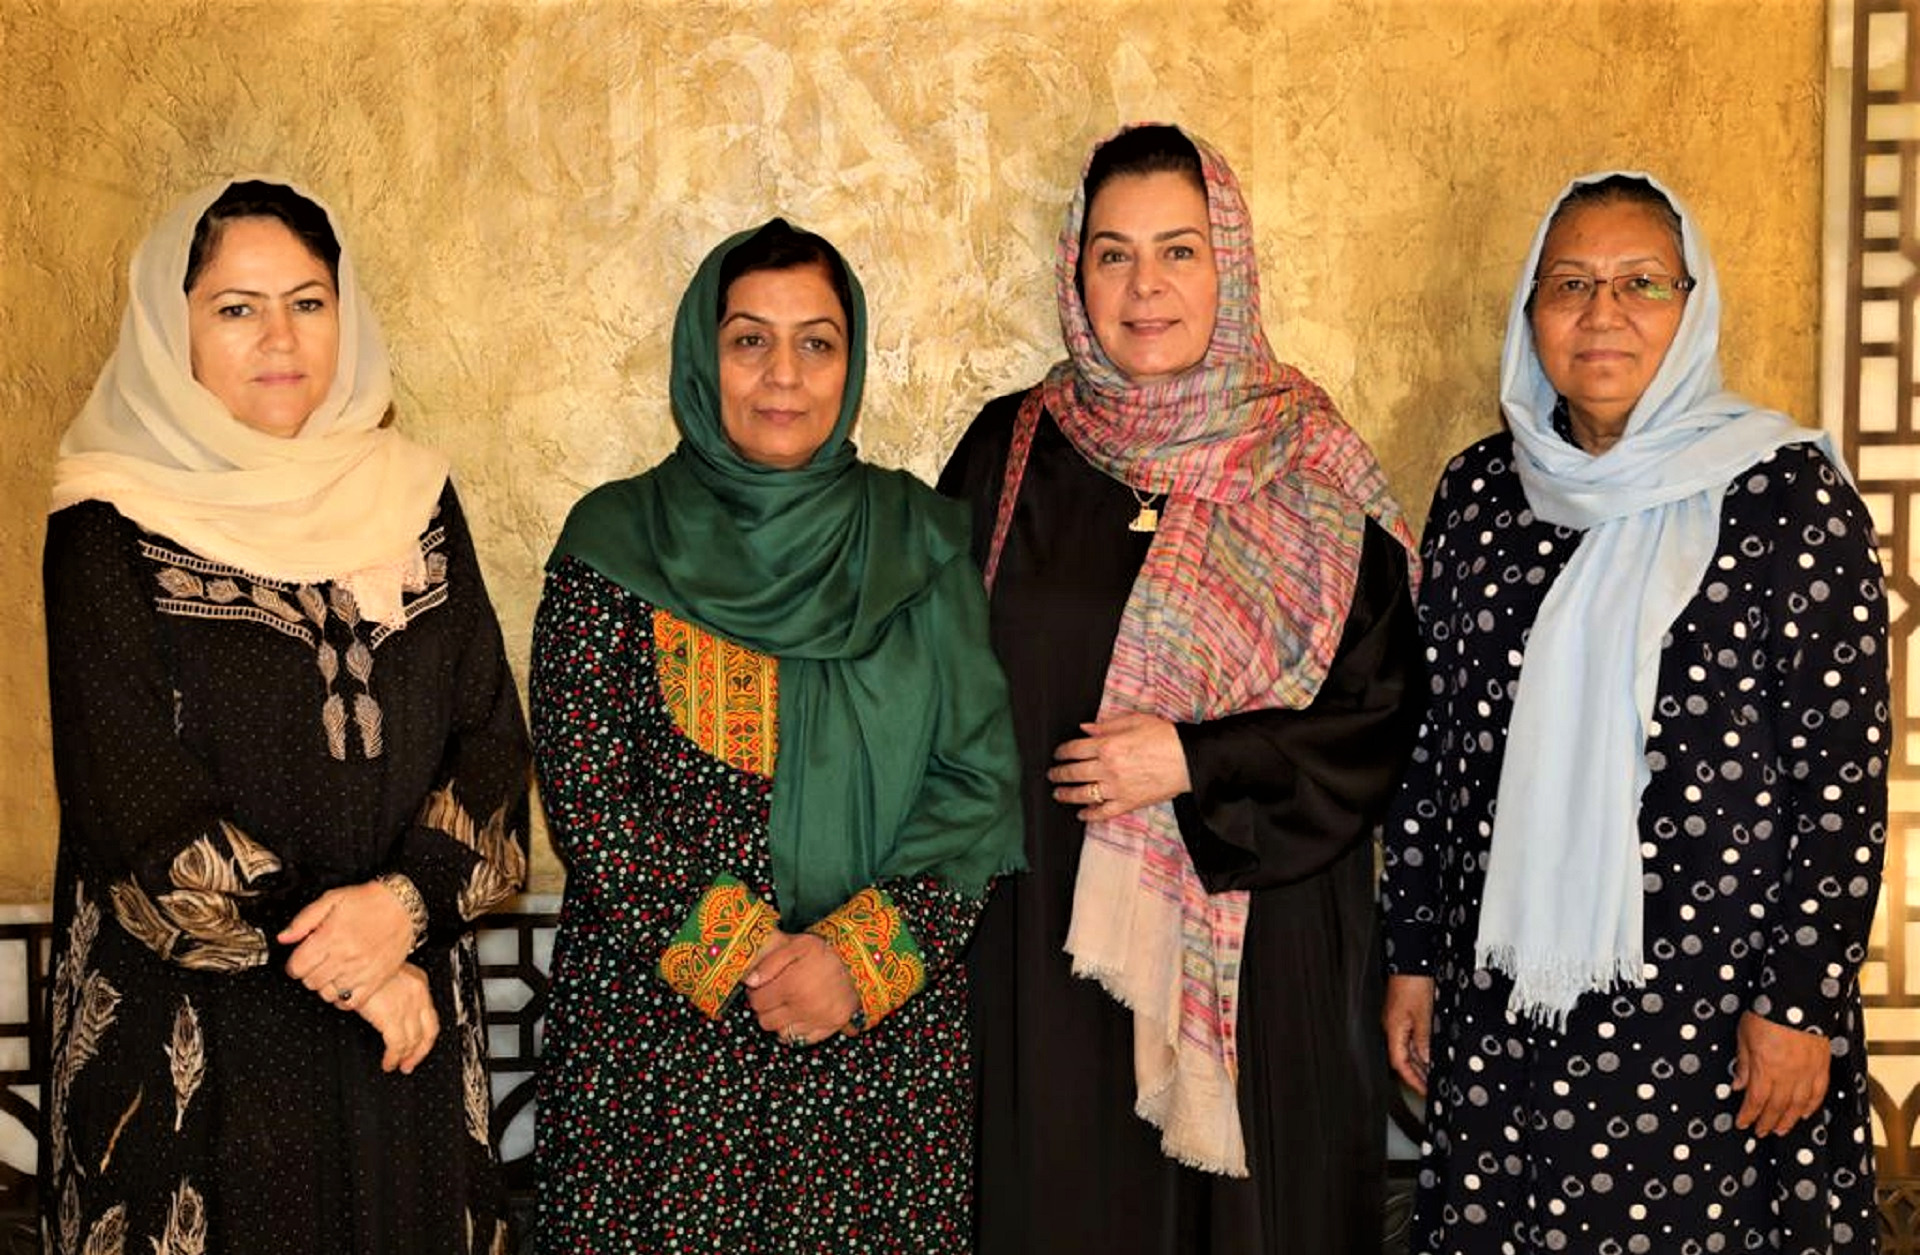 Fatma Gailani, Habiba Sarabi, Fawzia Koofi, Fawzia Koofi